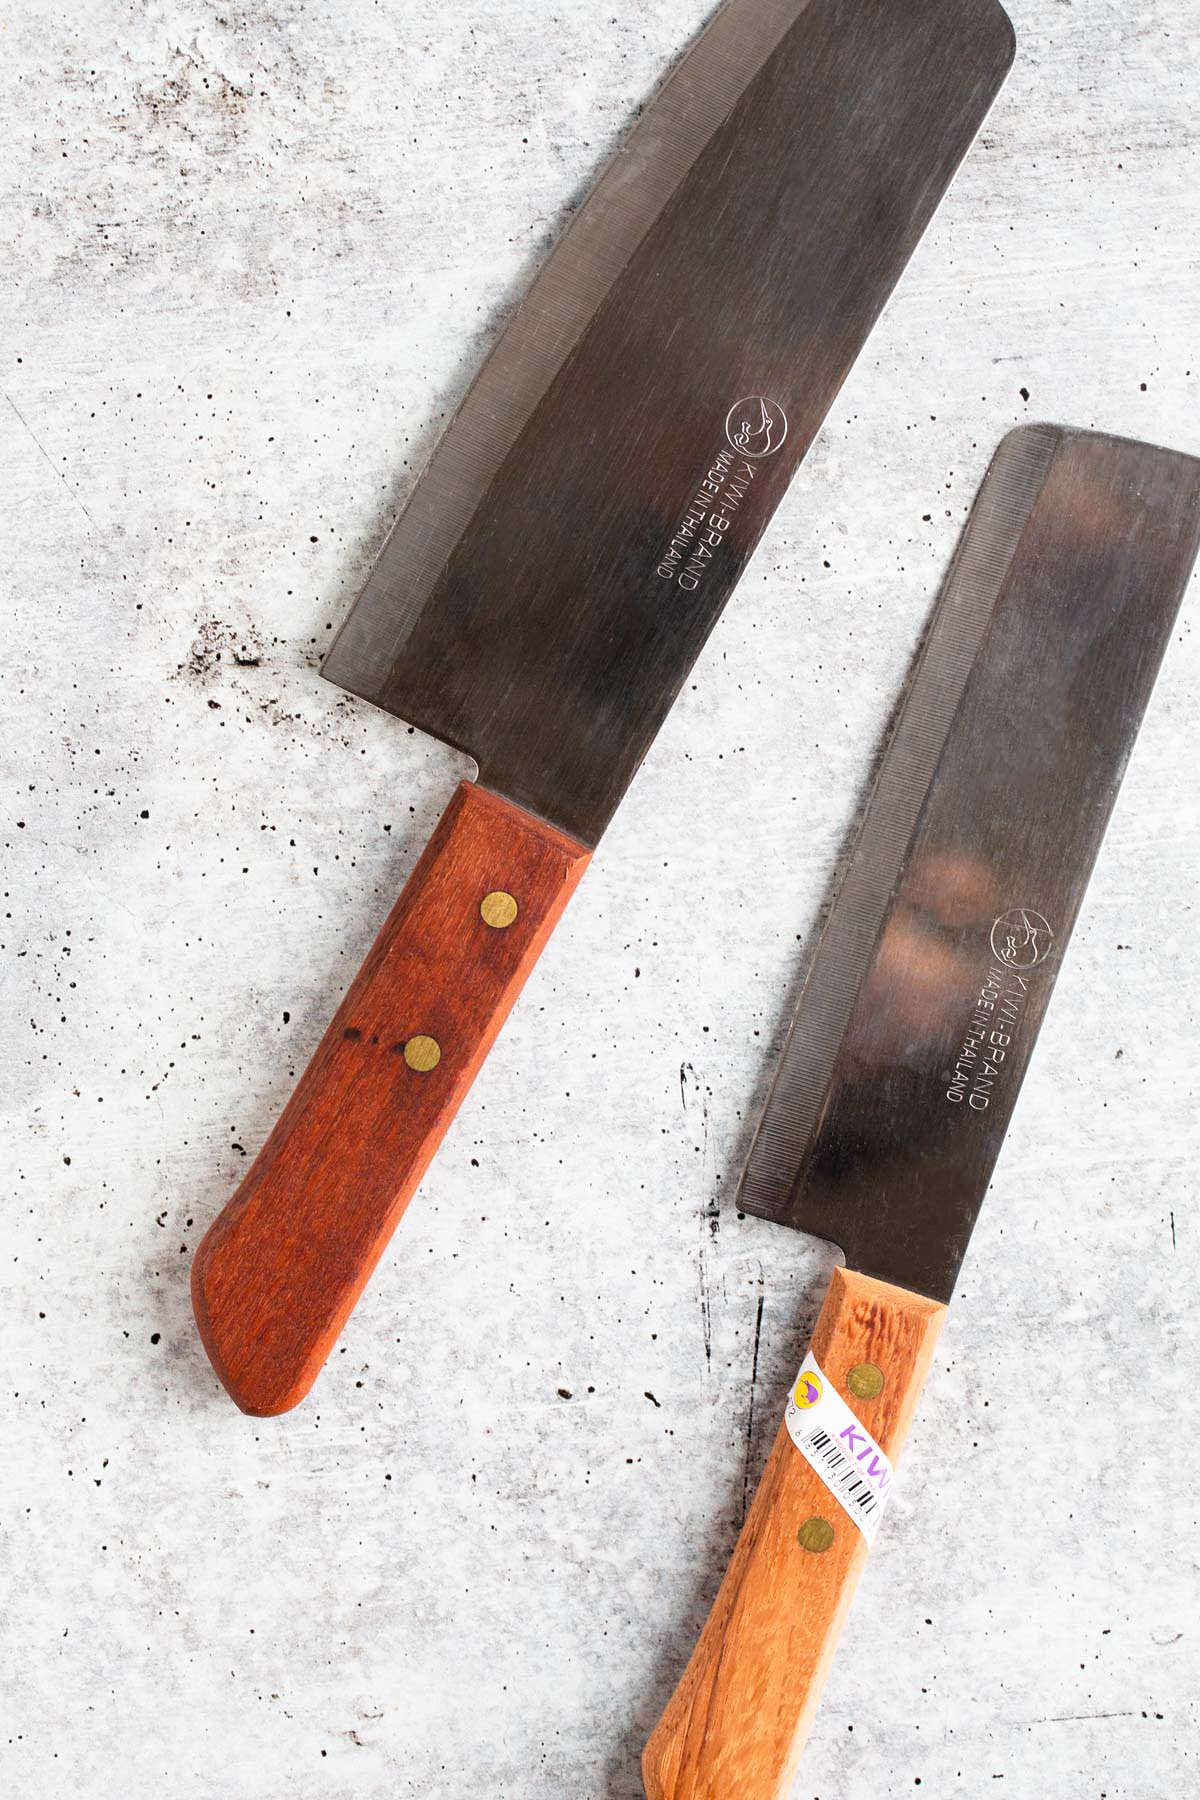 Two kiwi knives